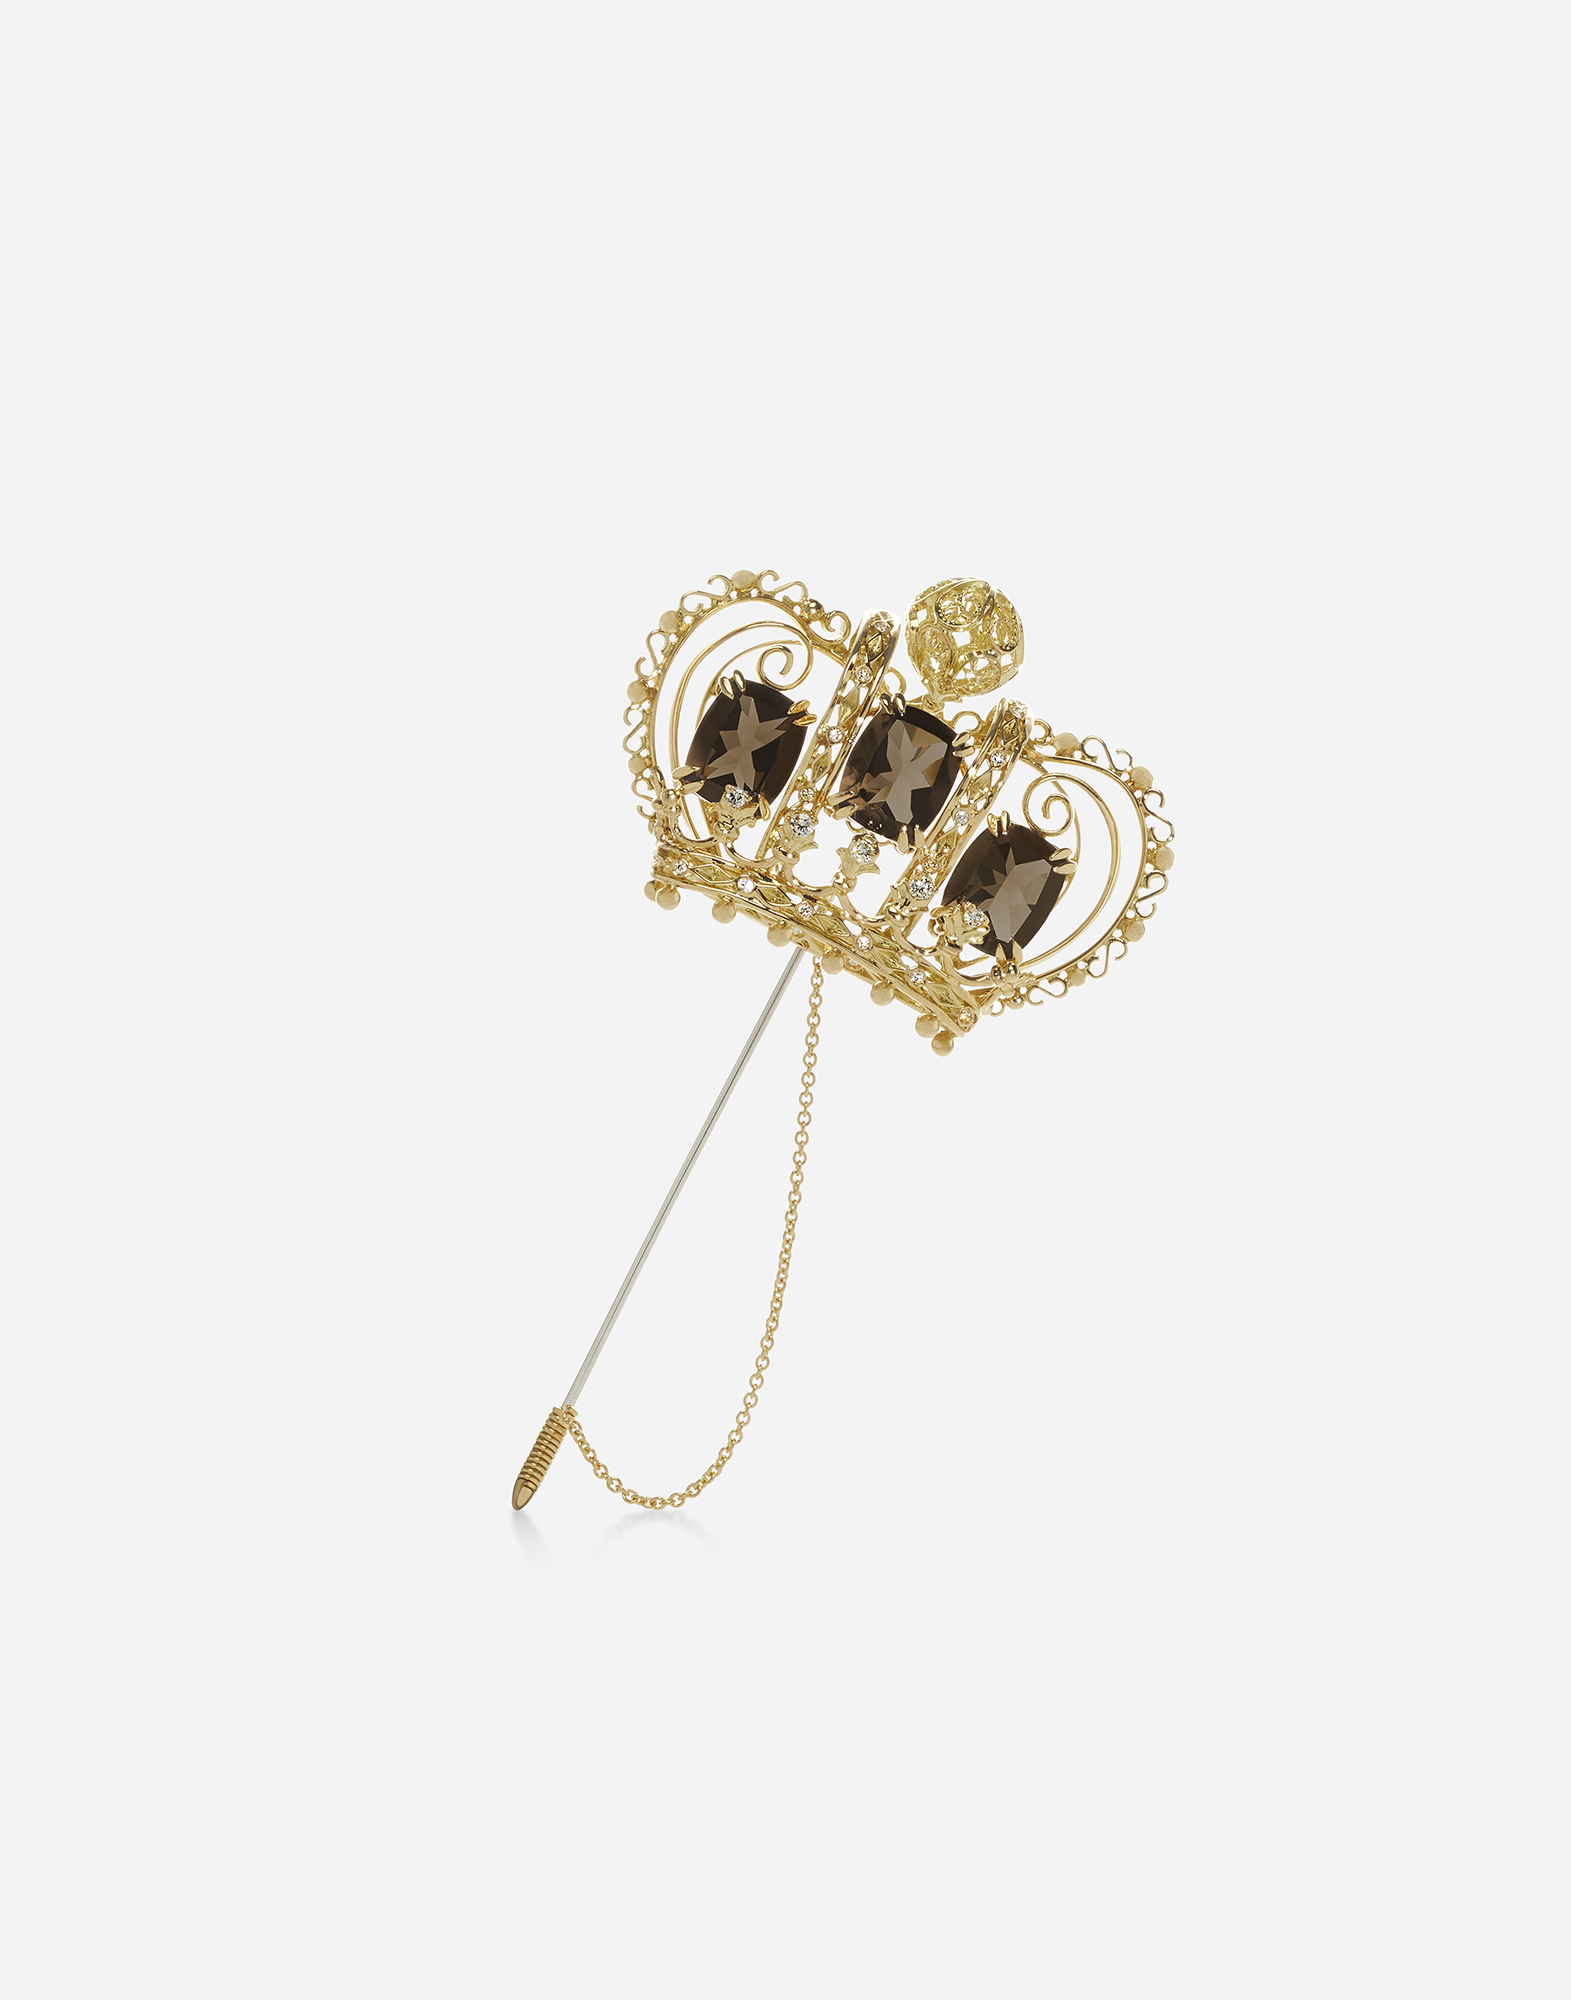 Dolce & Gabbana Crown brooch with quartzes and diamonds Yellow gold WPLK1GWYE01